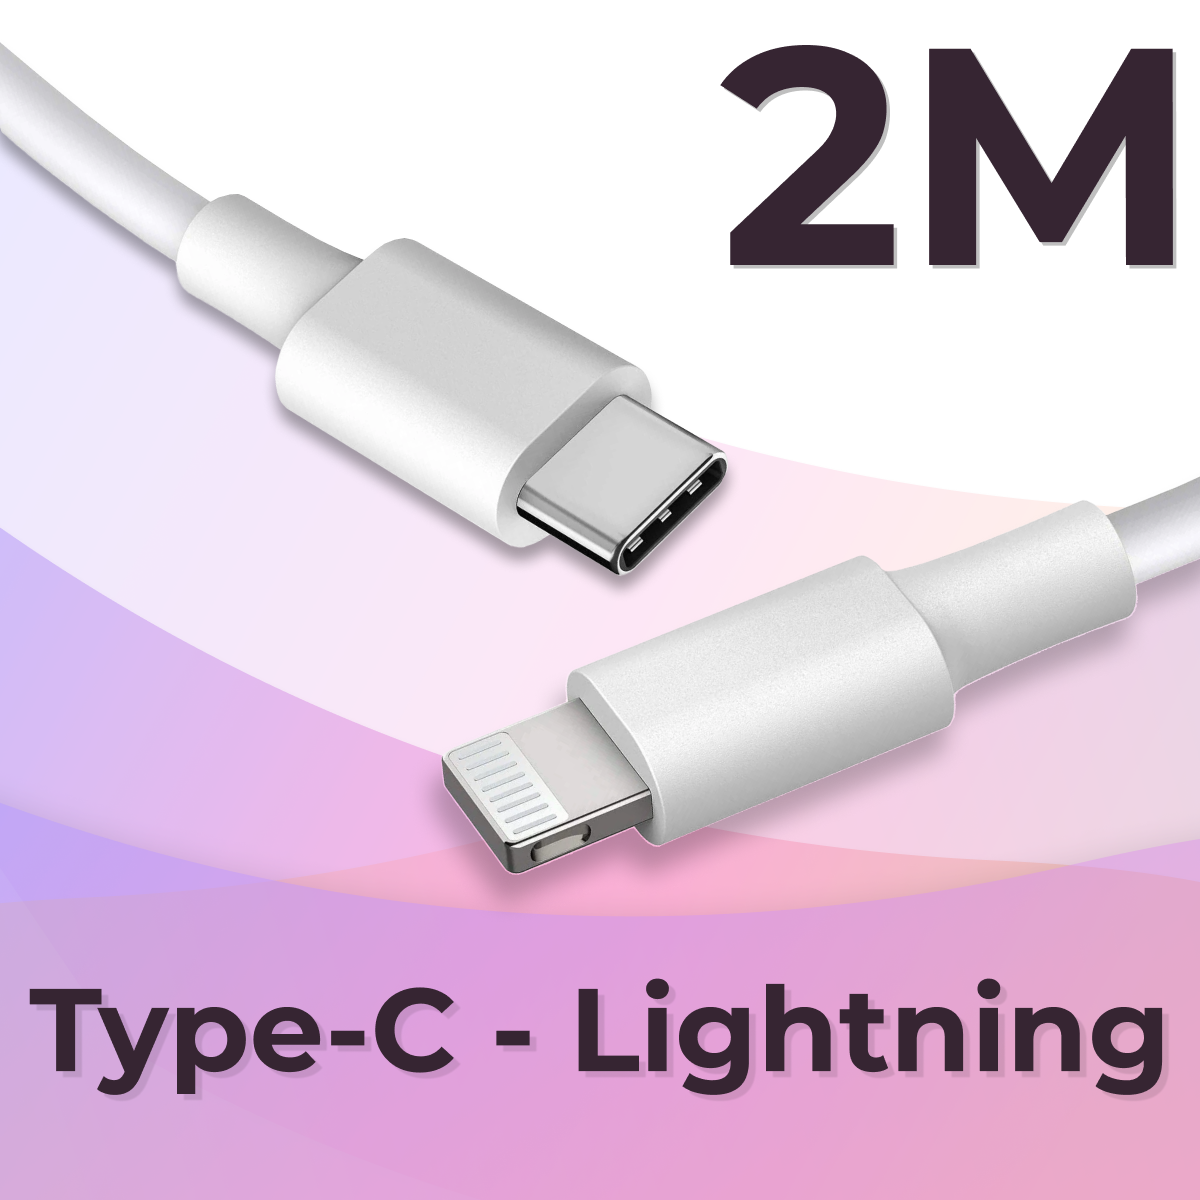 Кабель (2 метра) USB Type C - Lightning для зарядки Apple iPhone, AirPods, iPad / Провод ЮСБ Тайп Си - Лайтнинг на телефон Айфон, АирПодс, Айпад / Белый